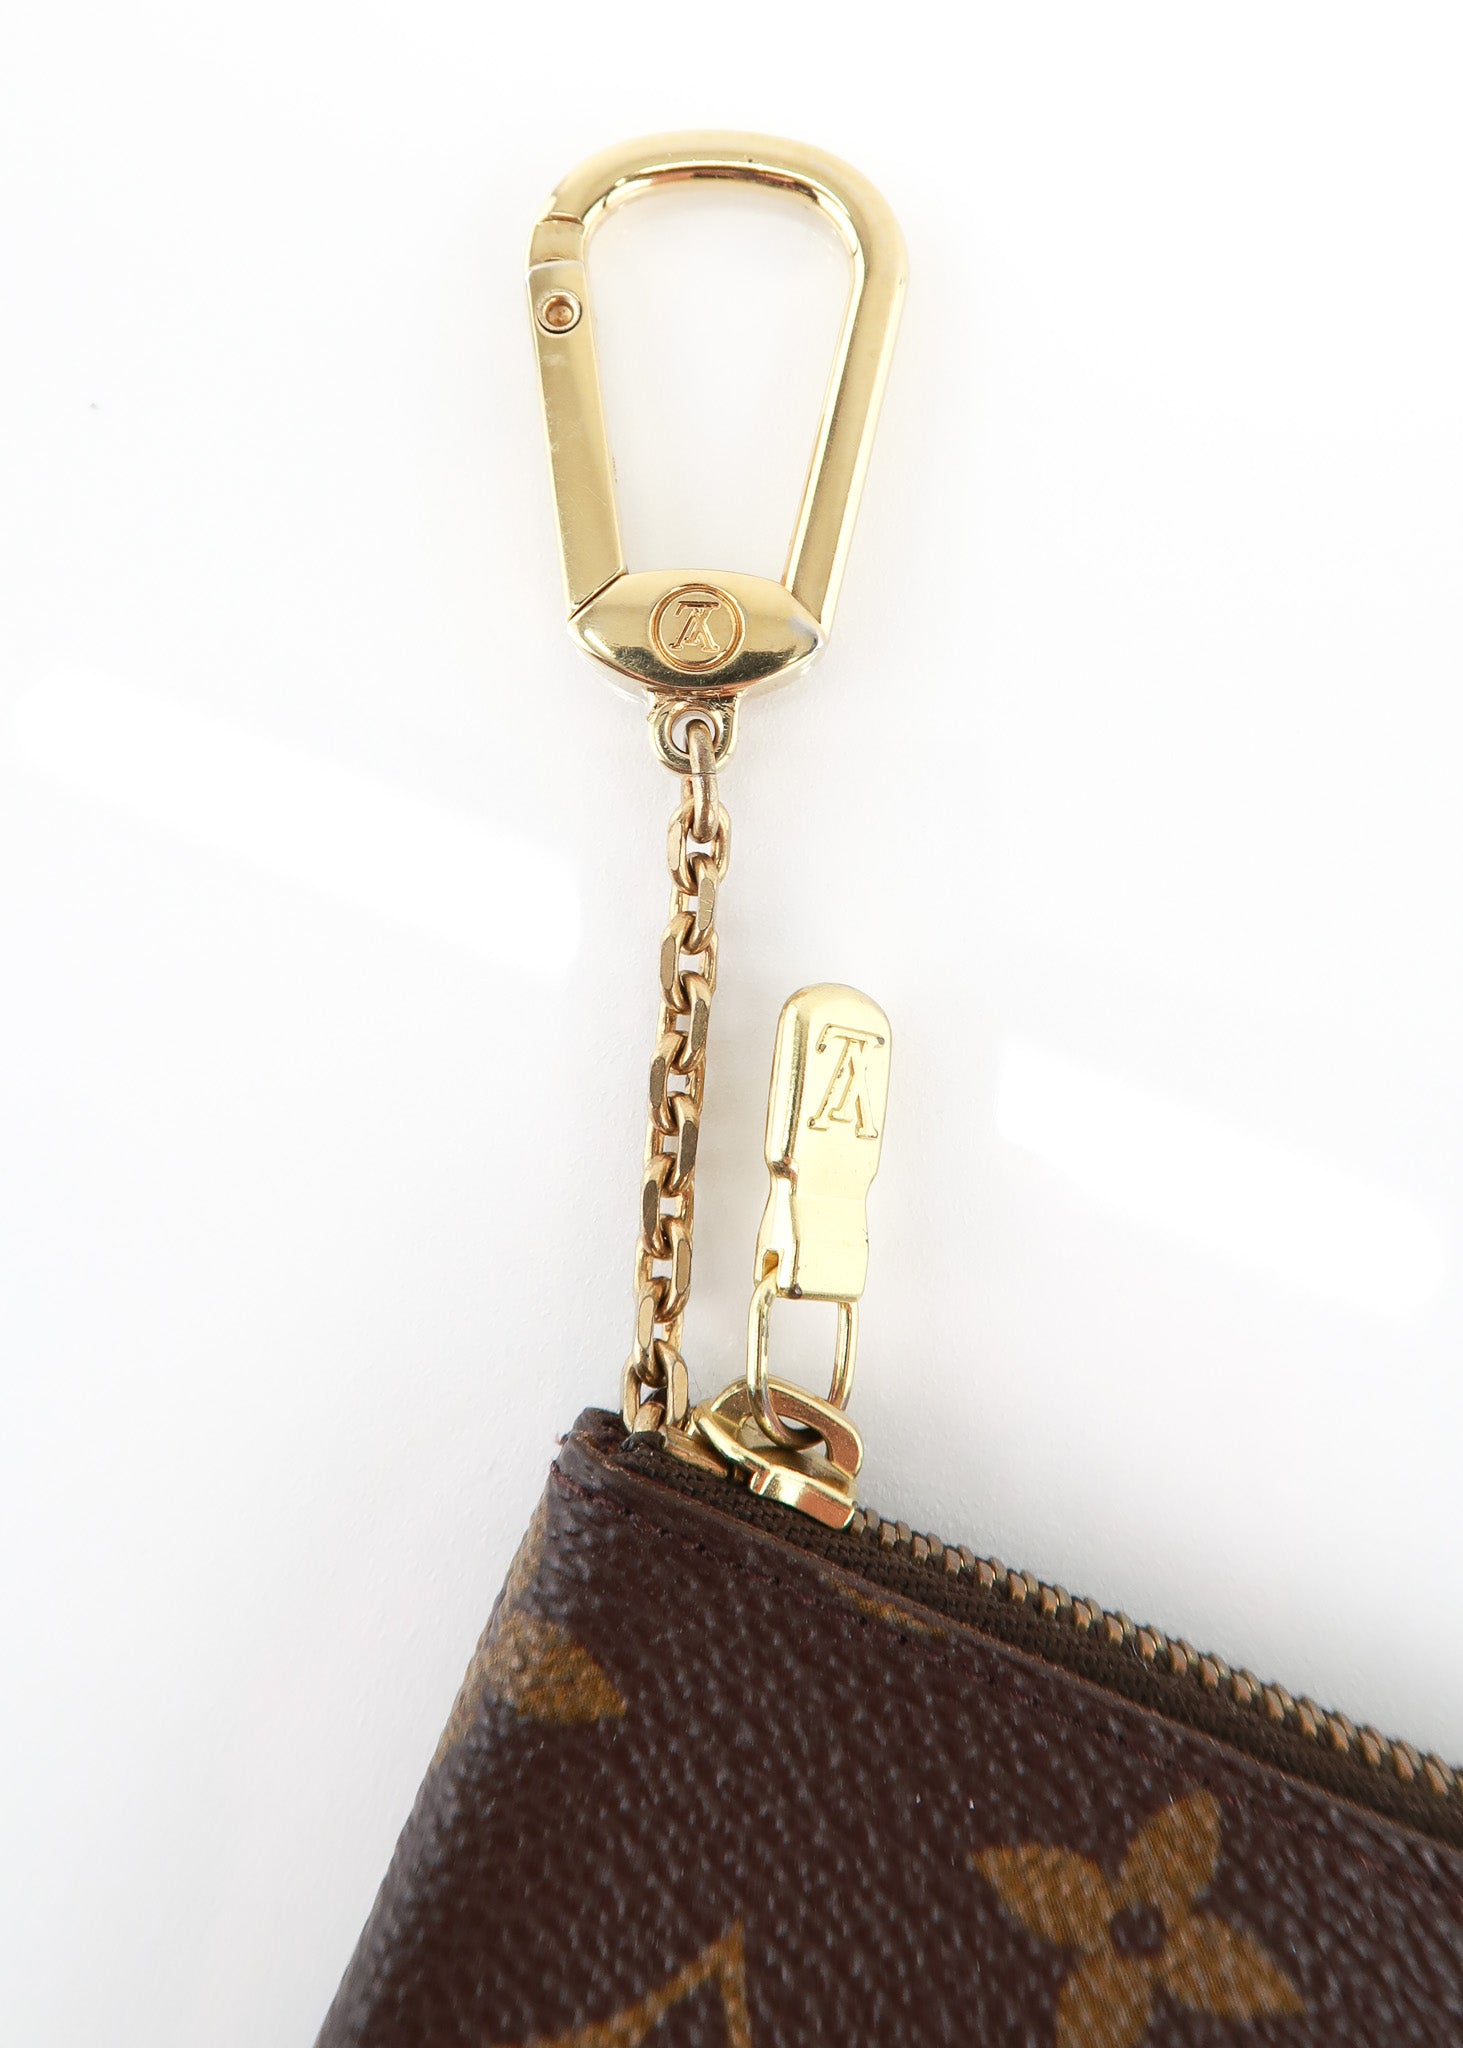 Louis Vuitton Key Pouch Old VS New Model 